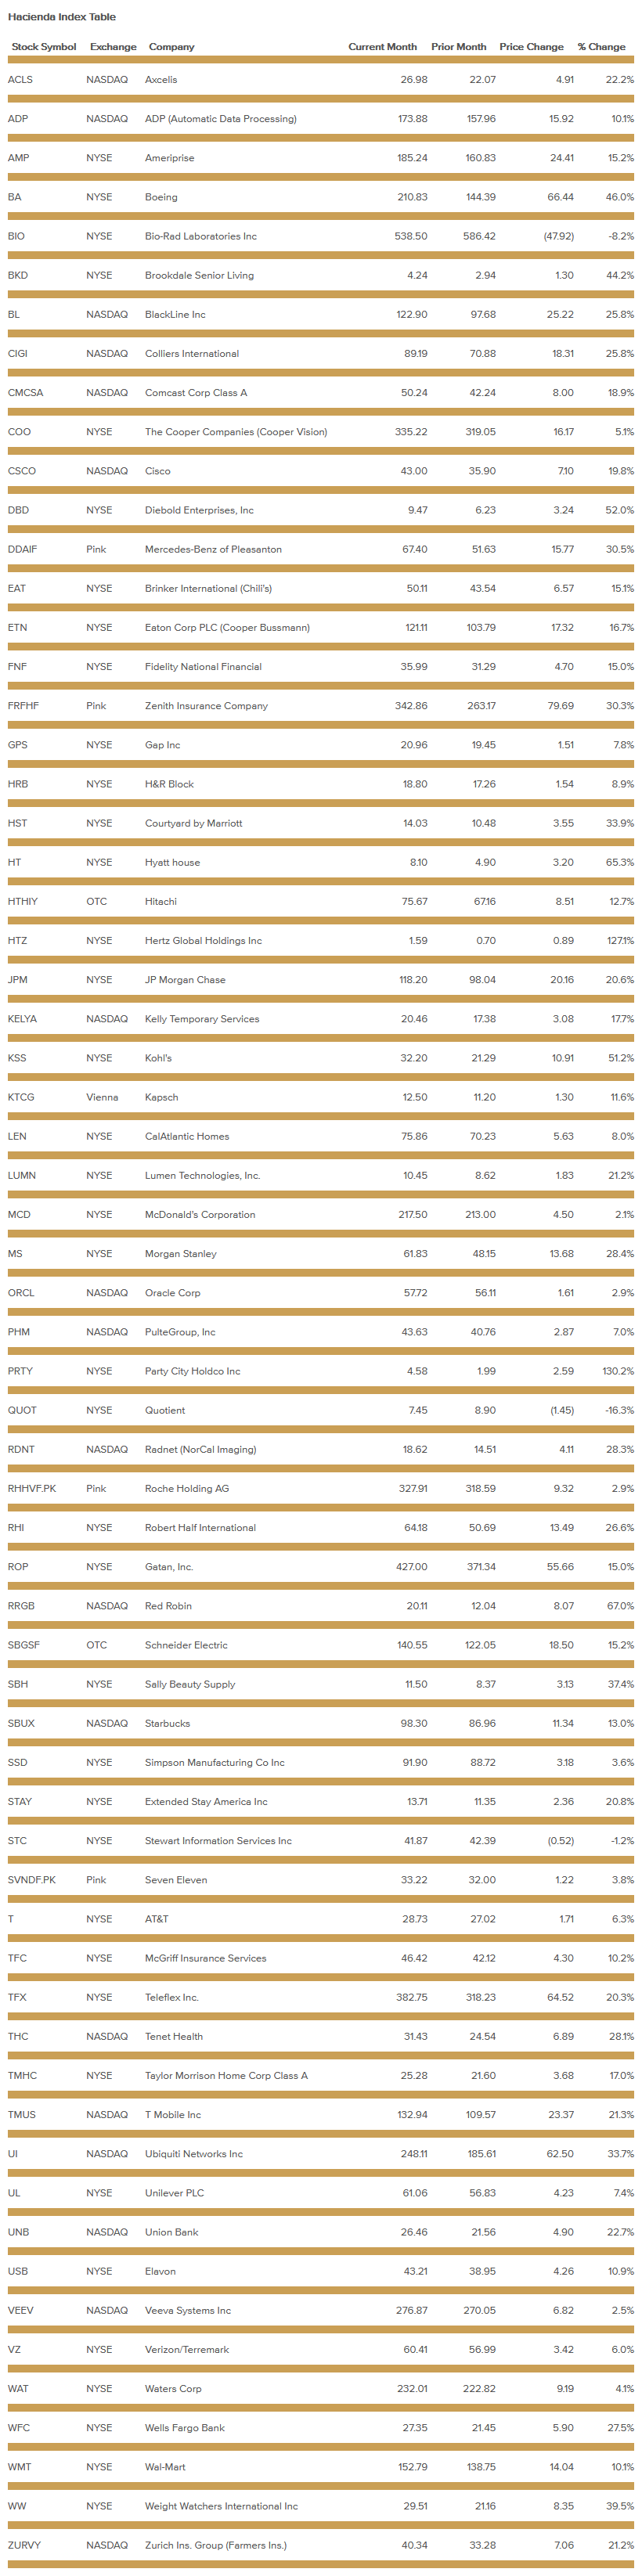 hacienda-index-table-december-2020.png